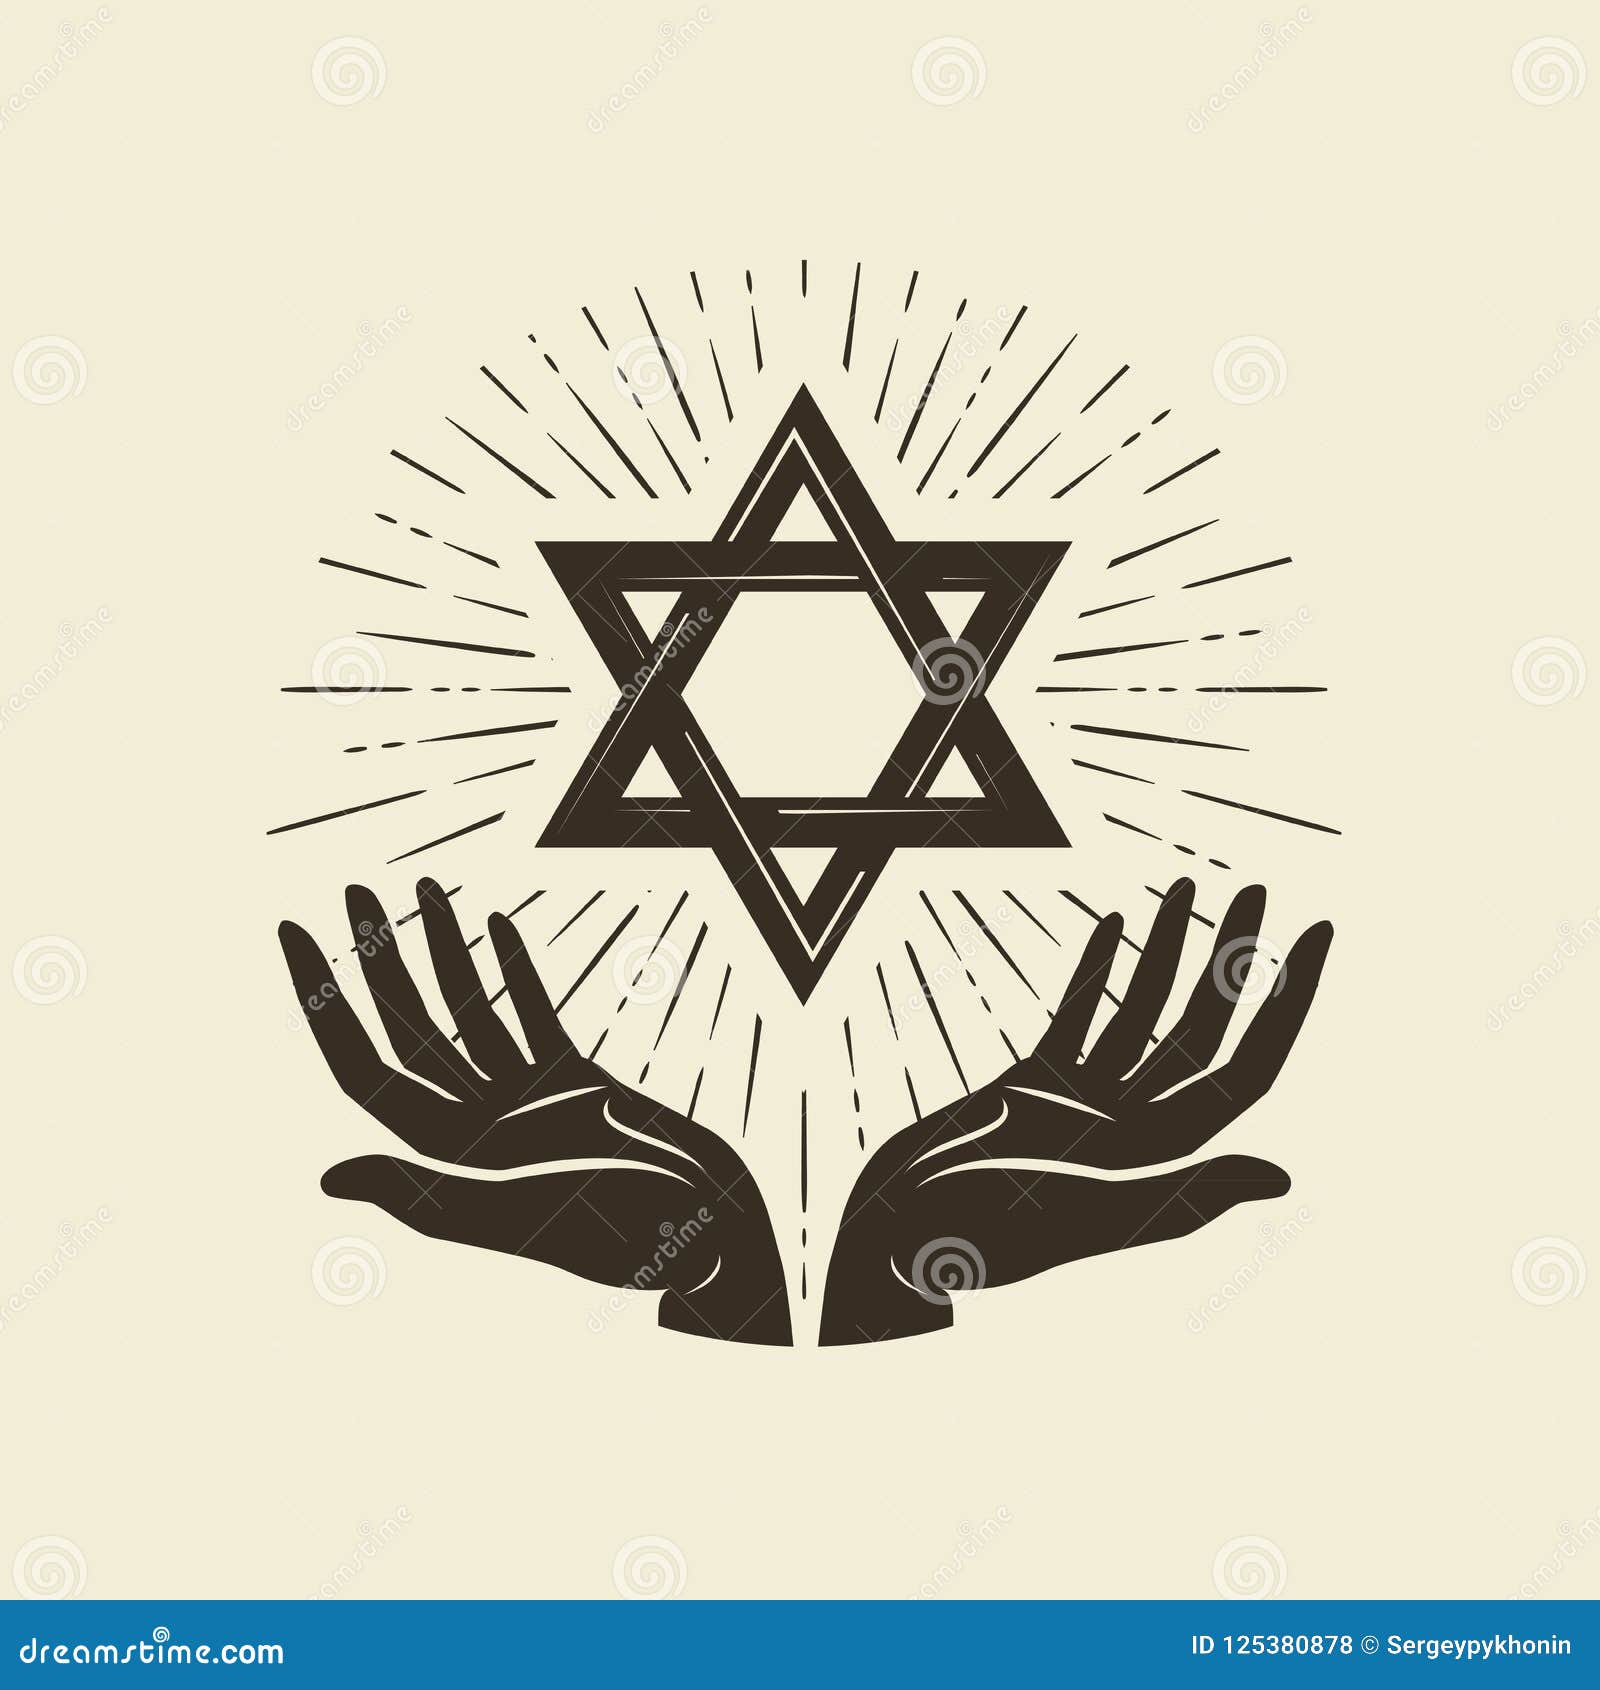 star of david, . israel or judaism emblem.  